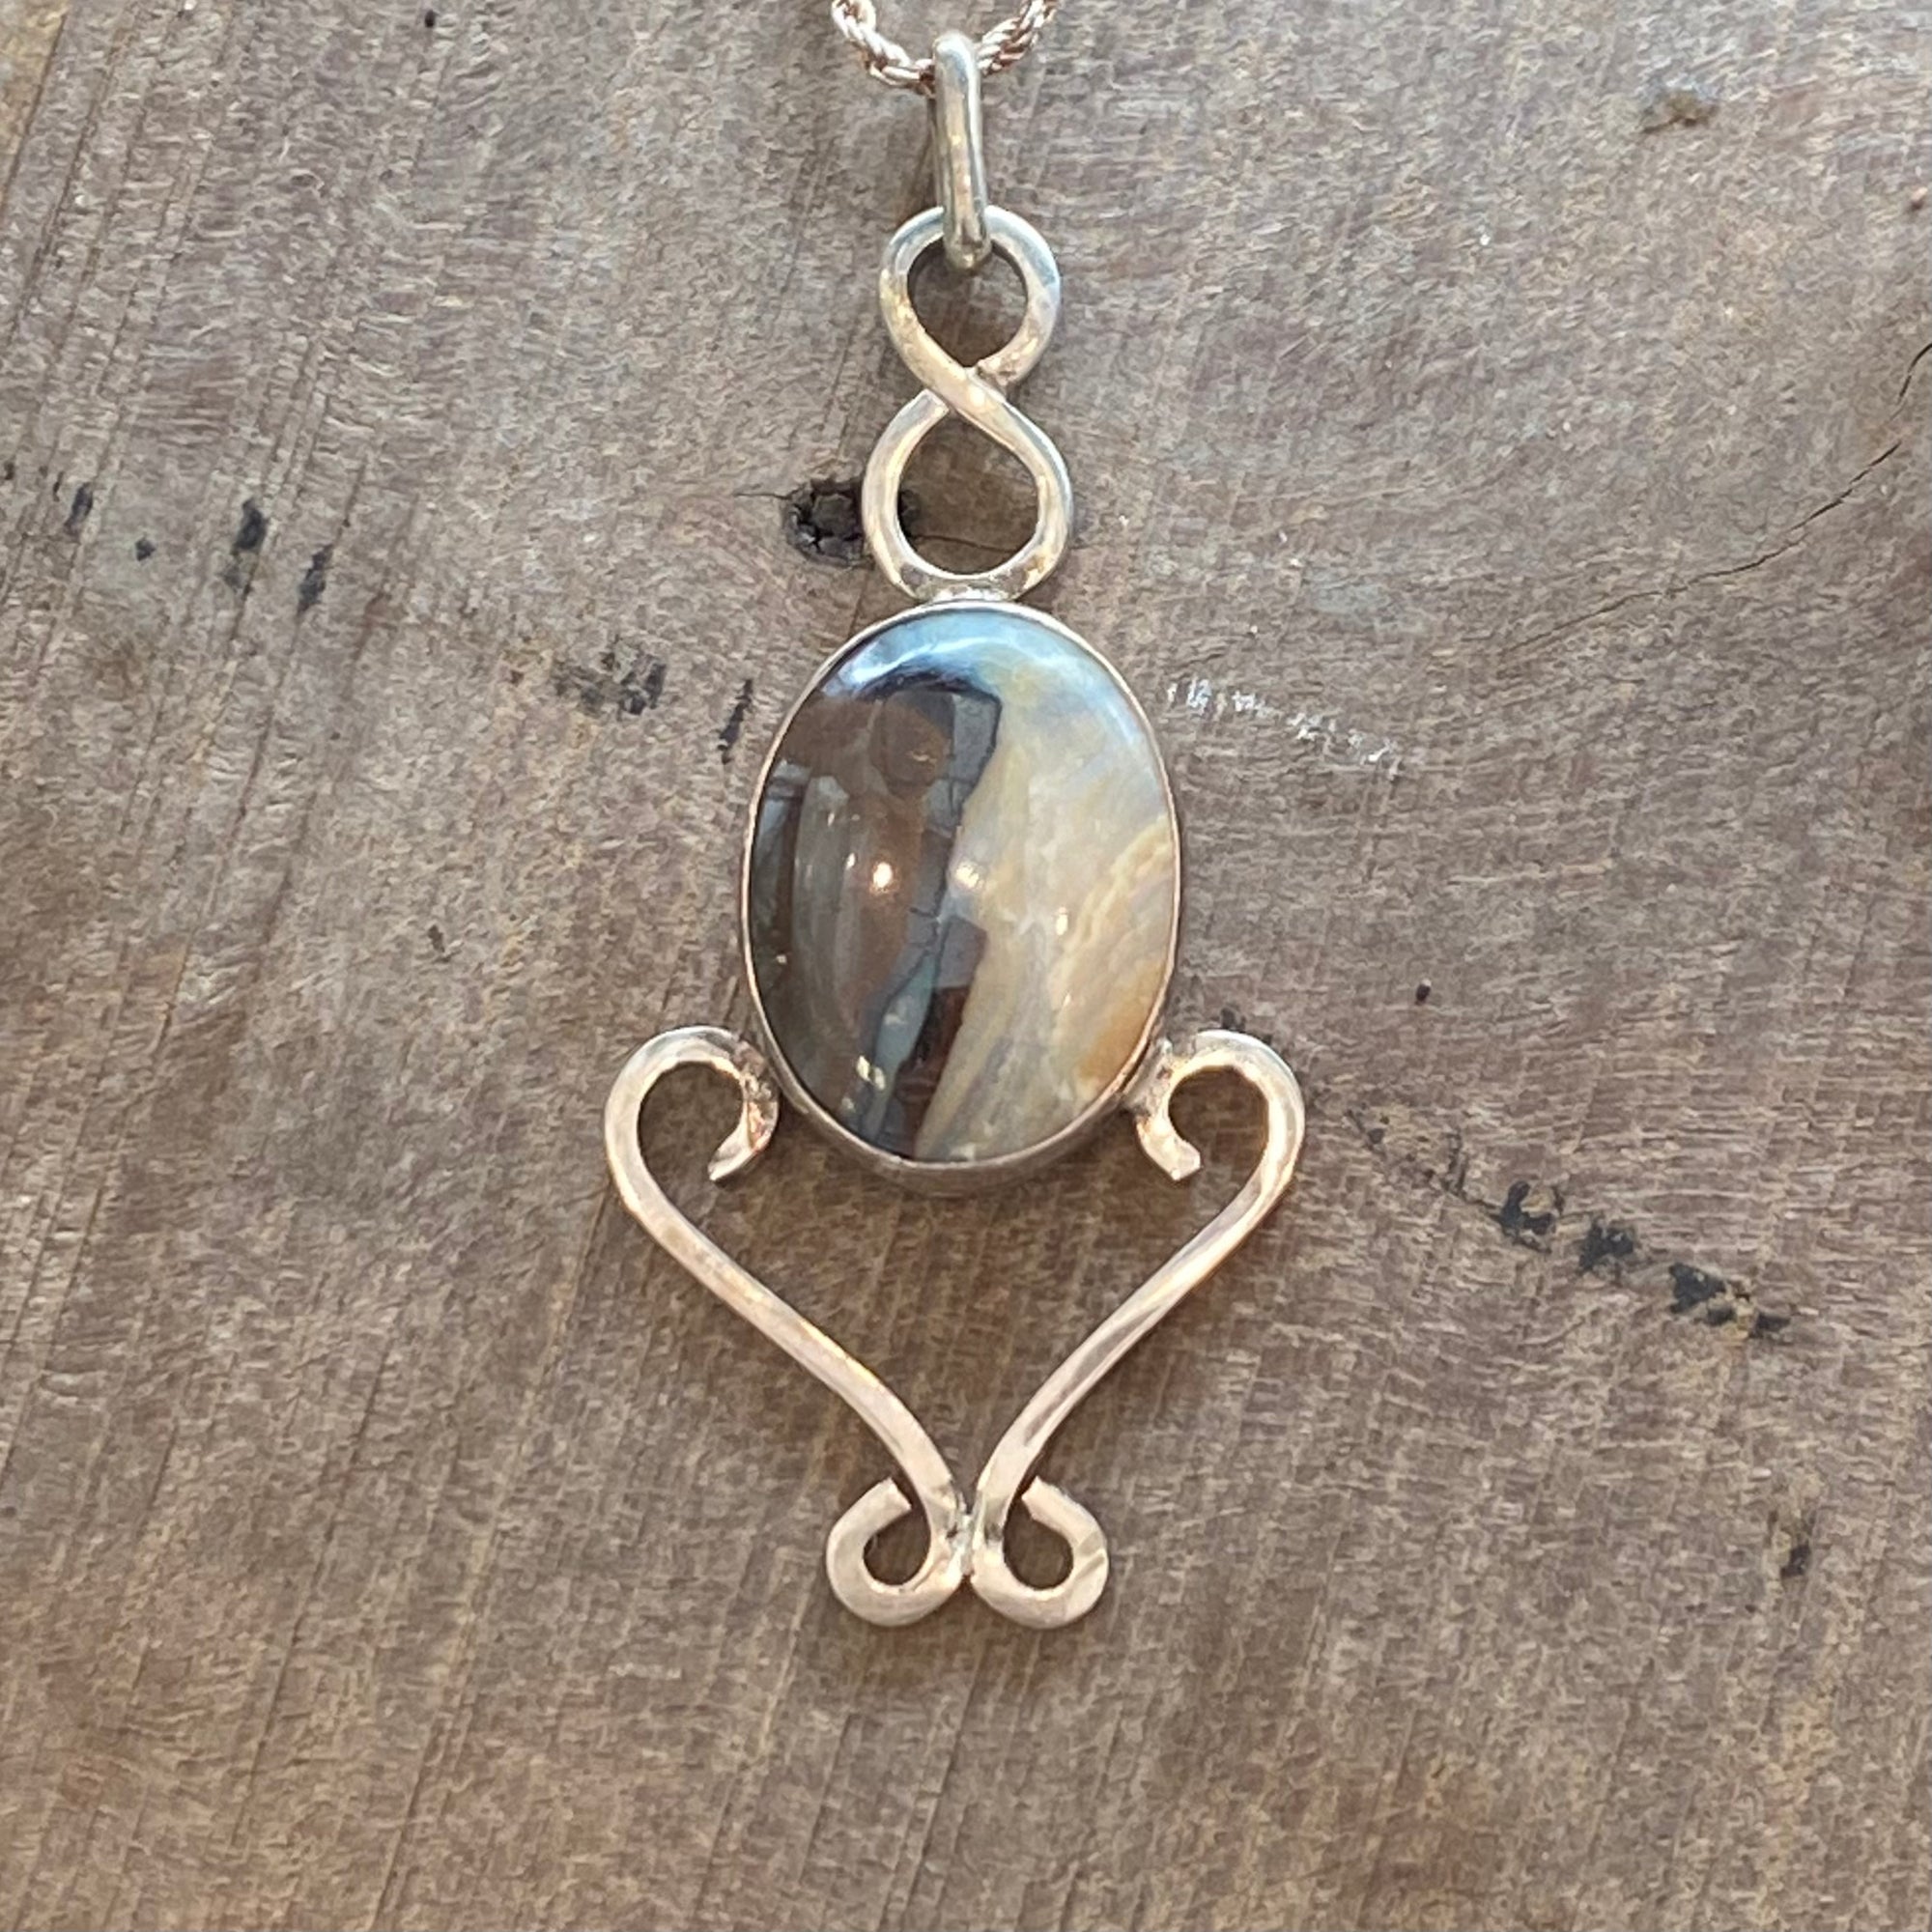 Australian Opal Pendant - Includes Sterling Silver chain